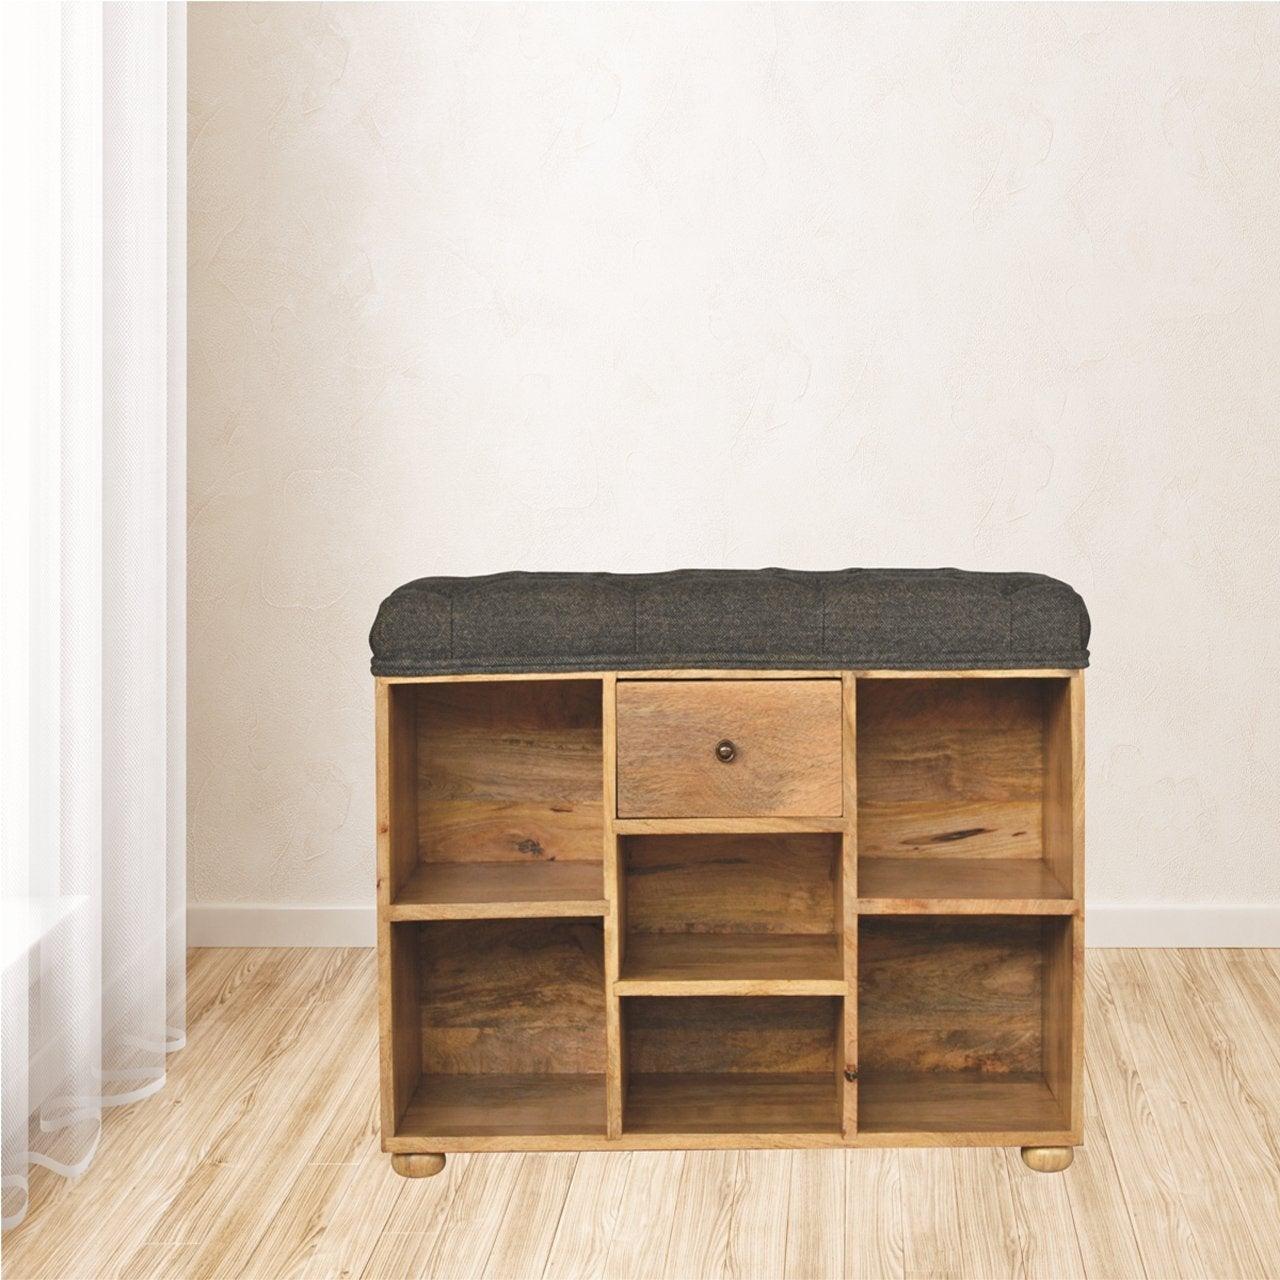 Black tweed 6 slot shoe storage bench - crimblefest furniture - image 2